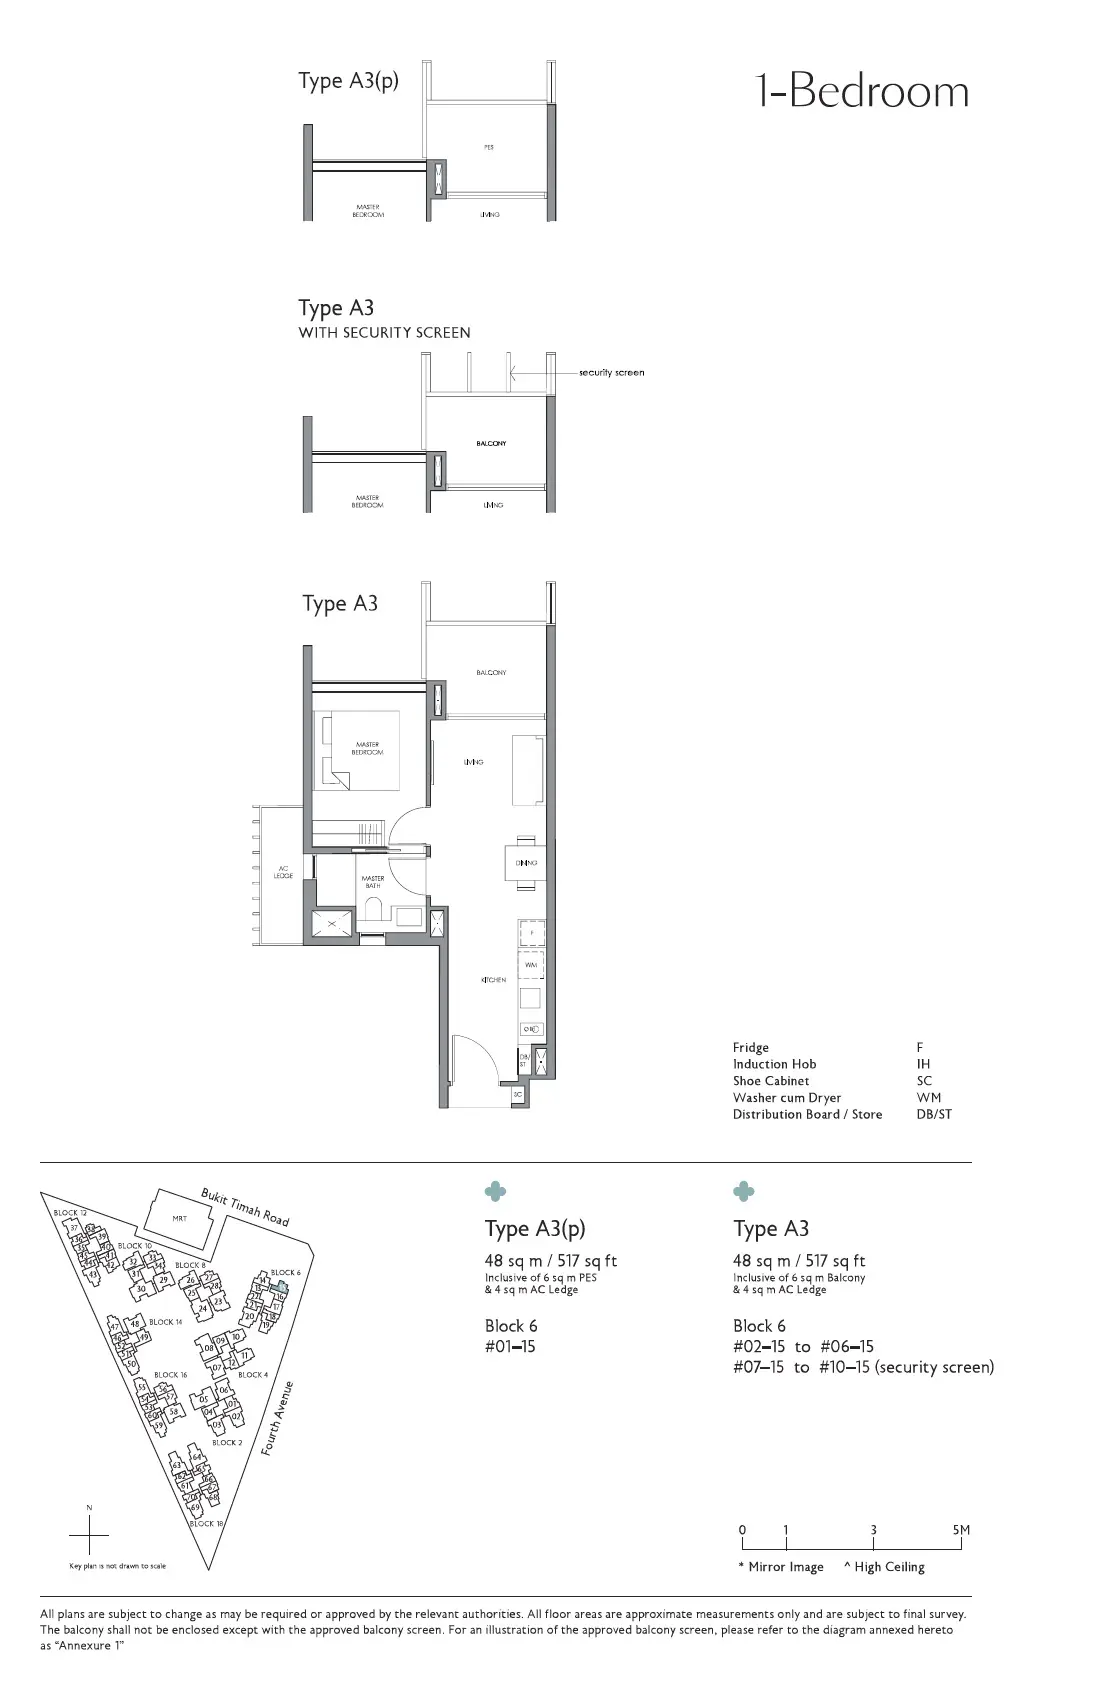 Fourth Avenue Residences - Floor Plan - 1 Bedroom A3